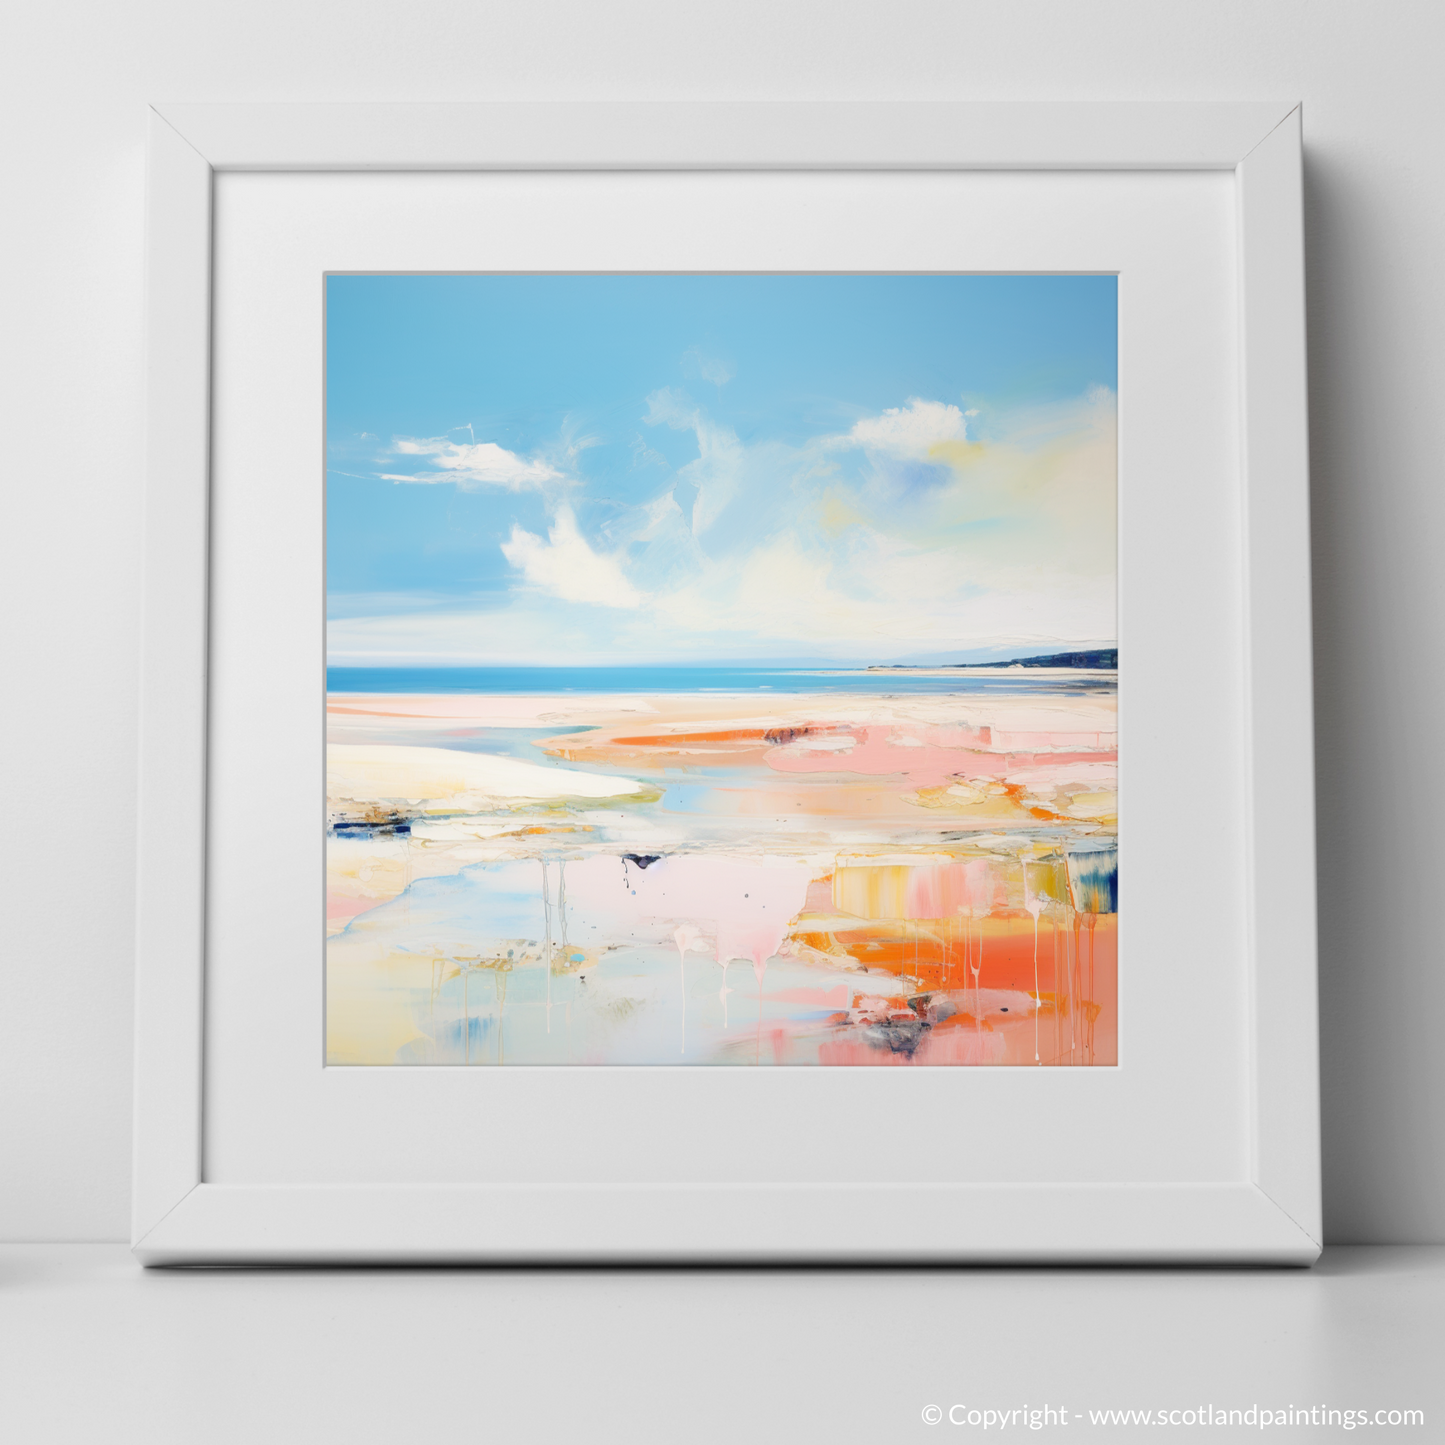 Art Print of Nairn Beach, Nairn in summer with a white frame